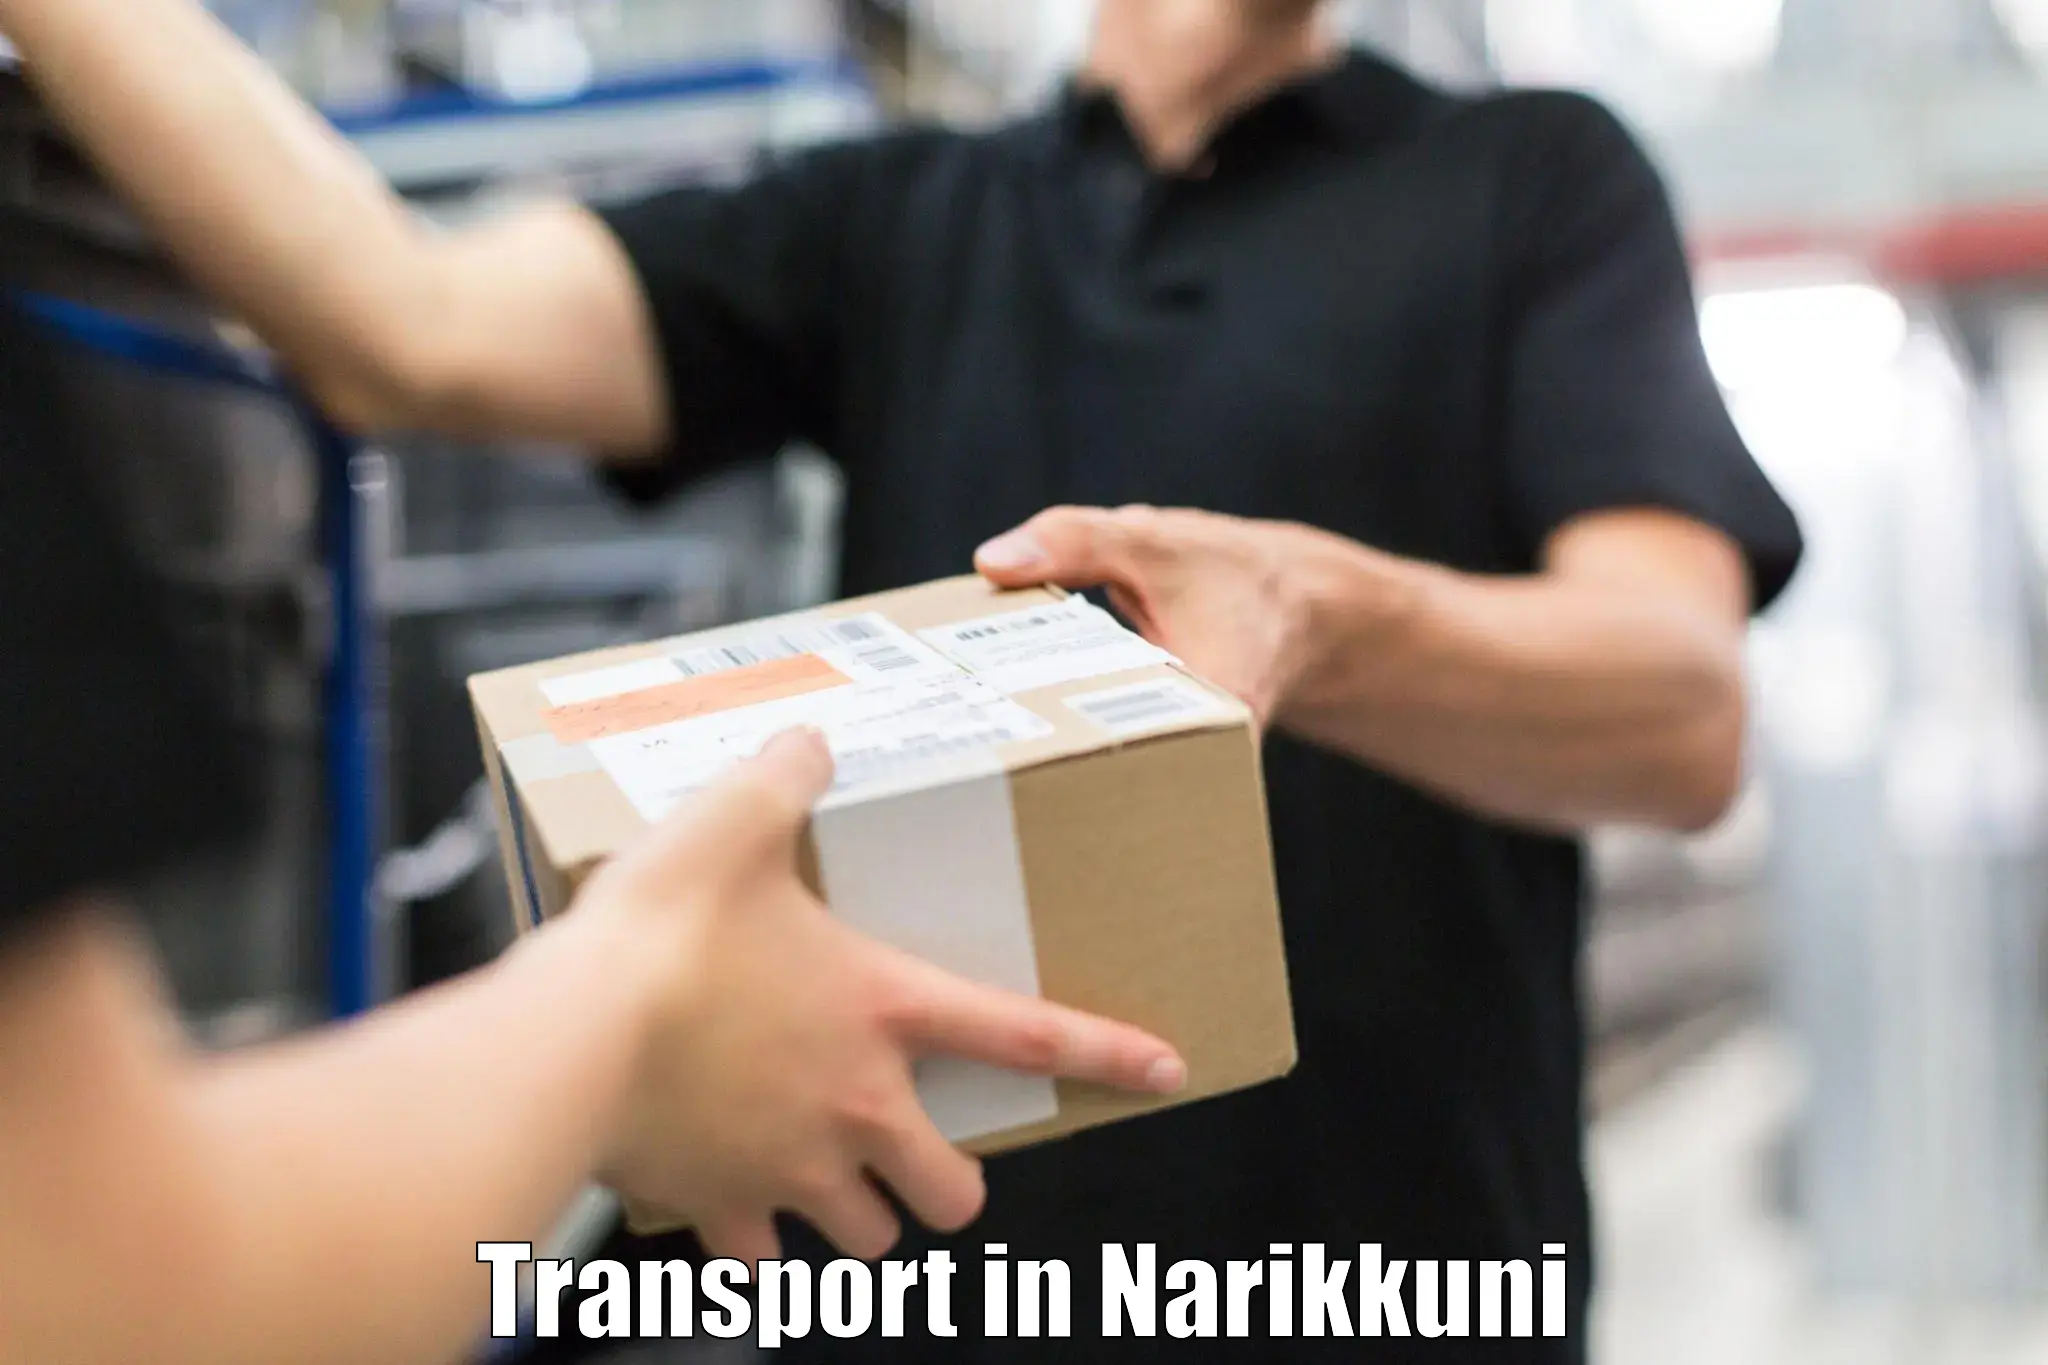 Goods transport services in Narikkuni